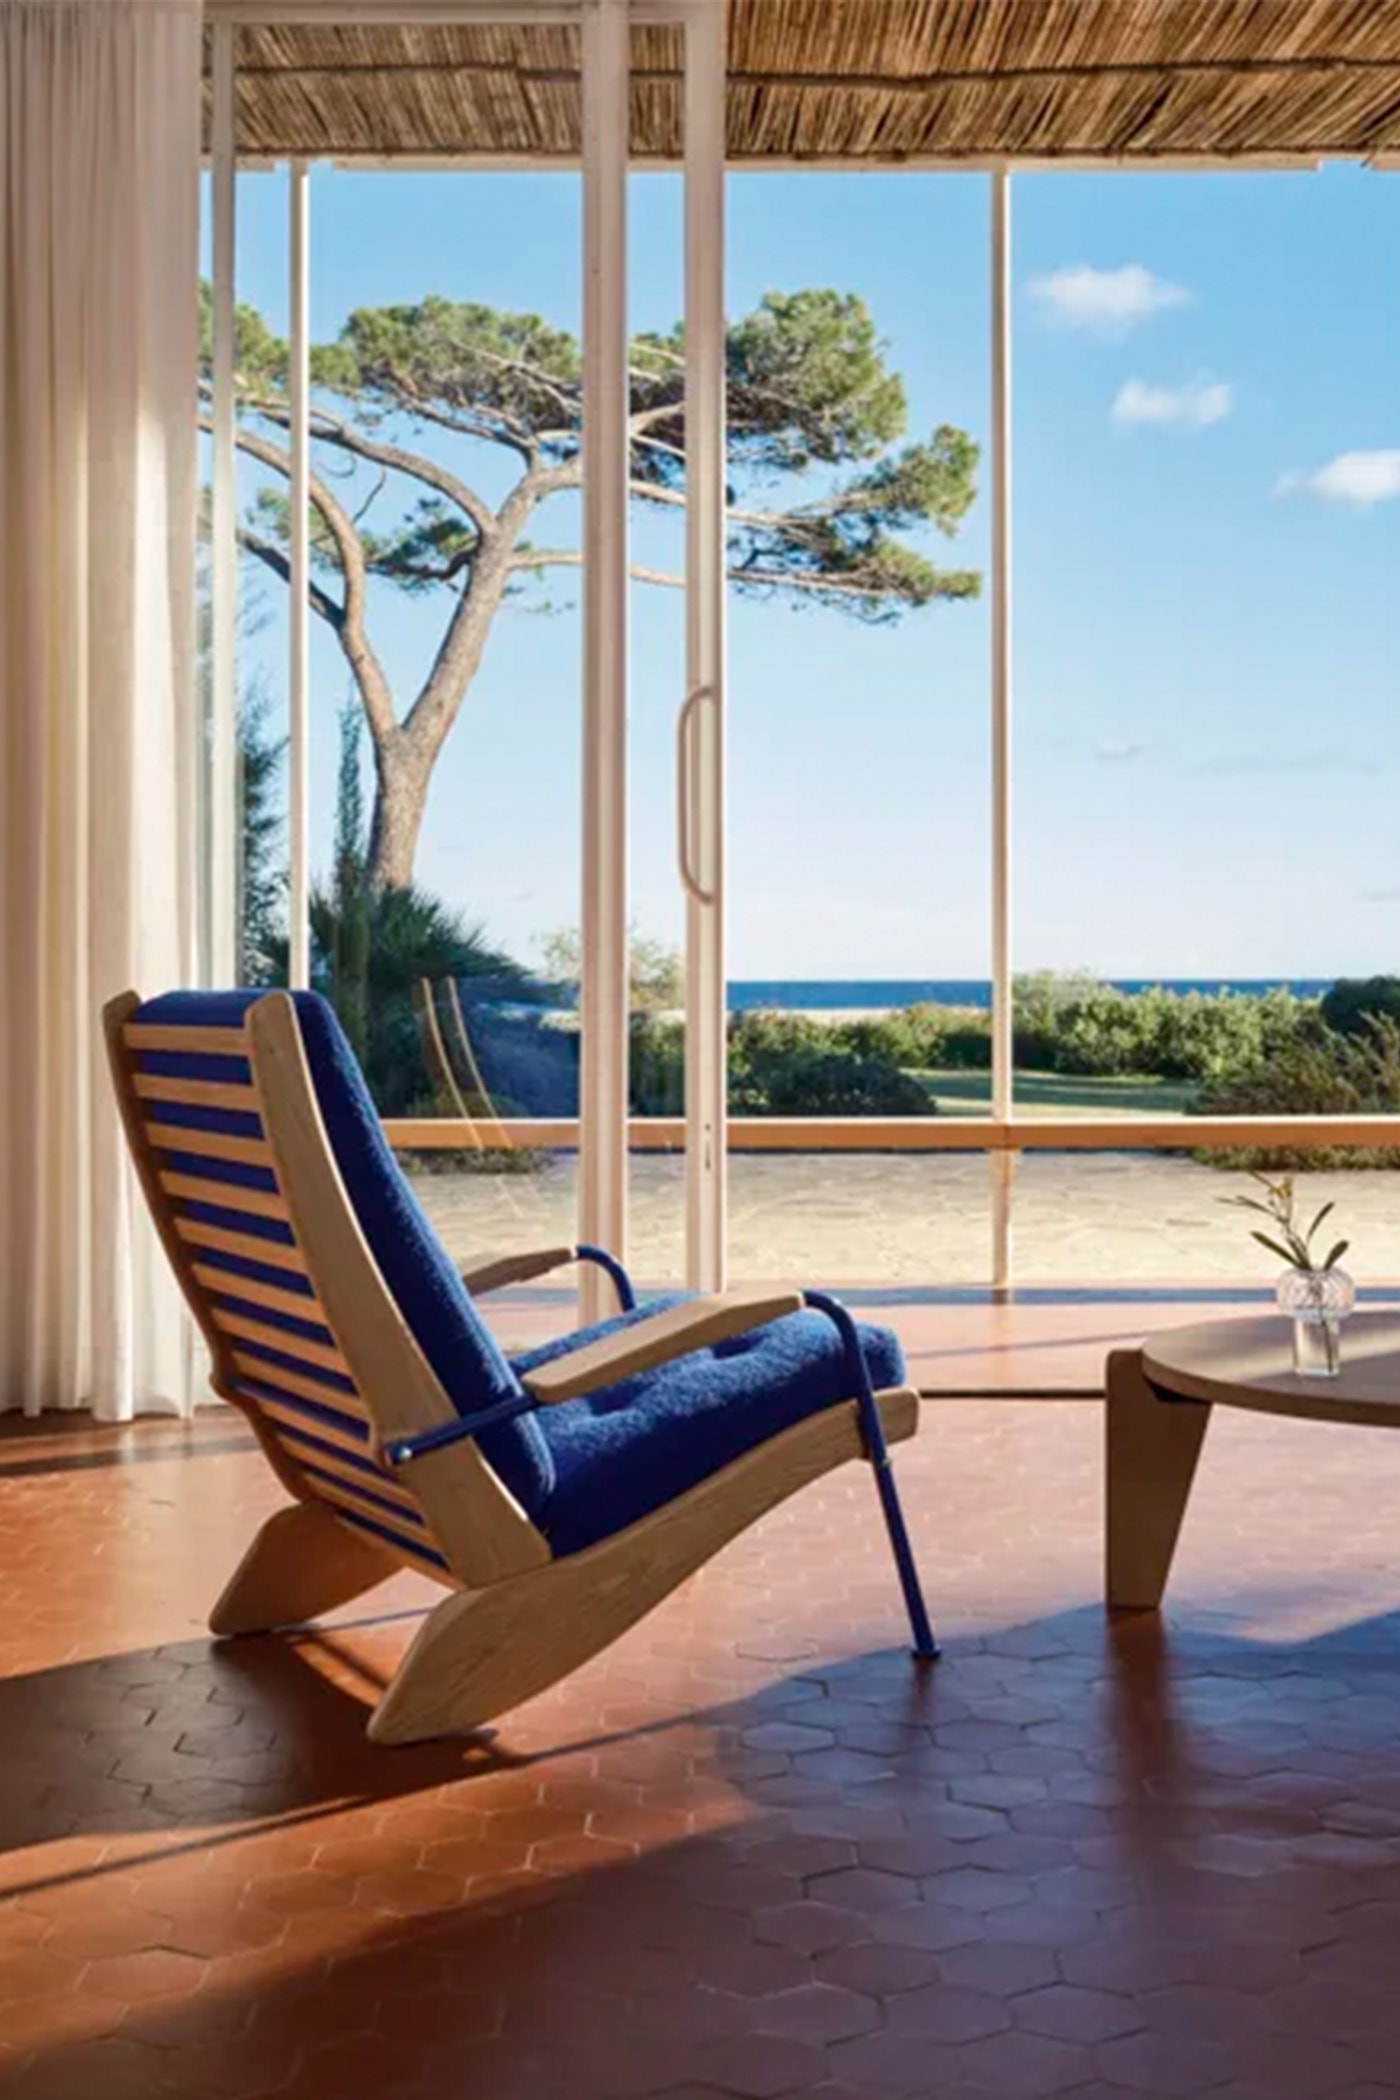 Vitra Furniture Kangourou Chair Jean Prouvé Collab blue decor design